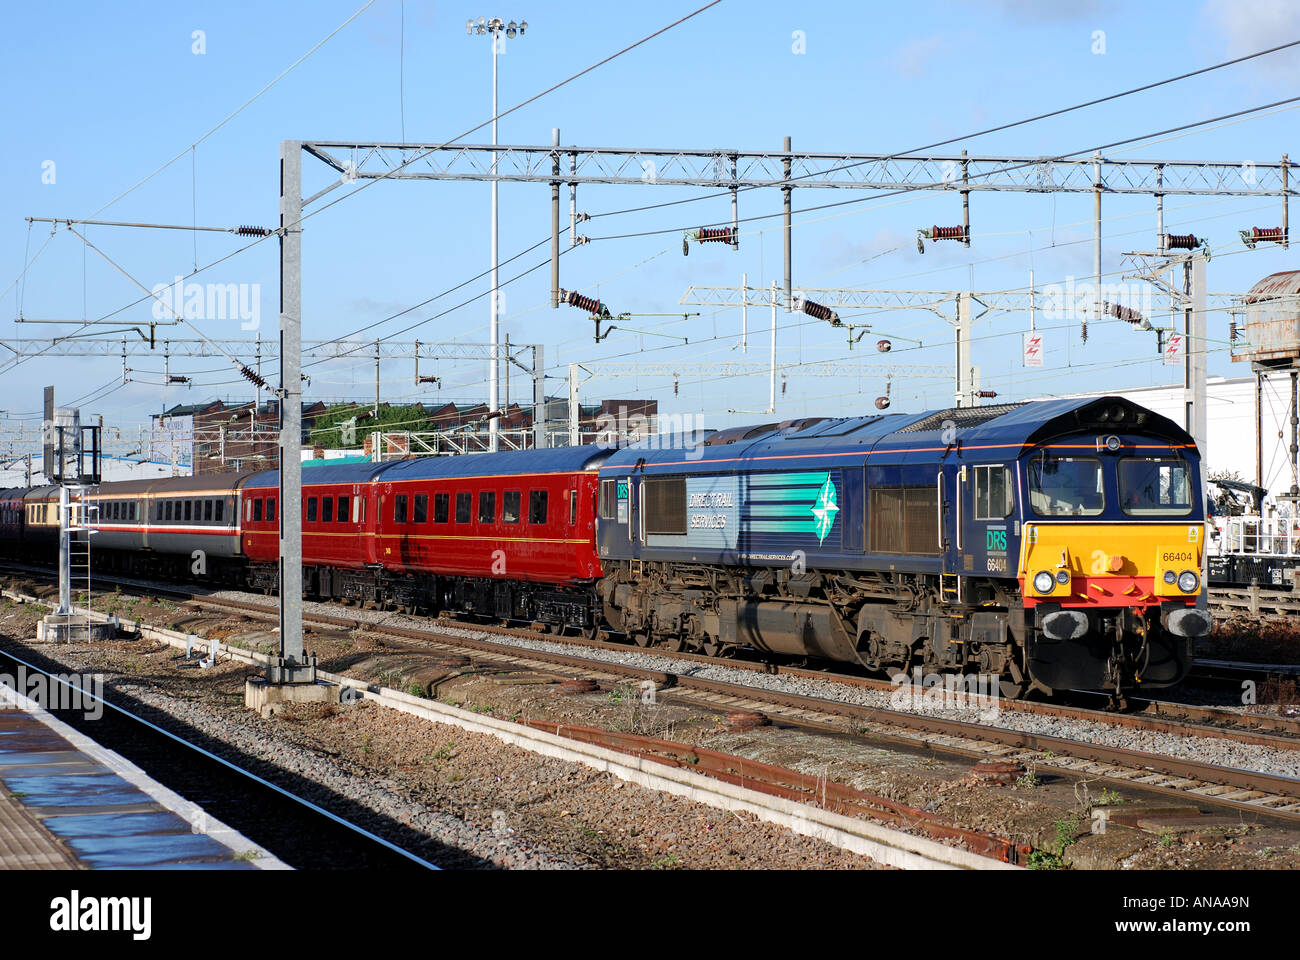 Classe 66 Services ferroviaire direct transport locomotive diesel wagons vides au rugby, England, UK Banque D'Images